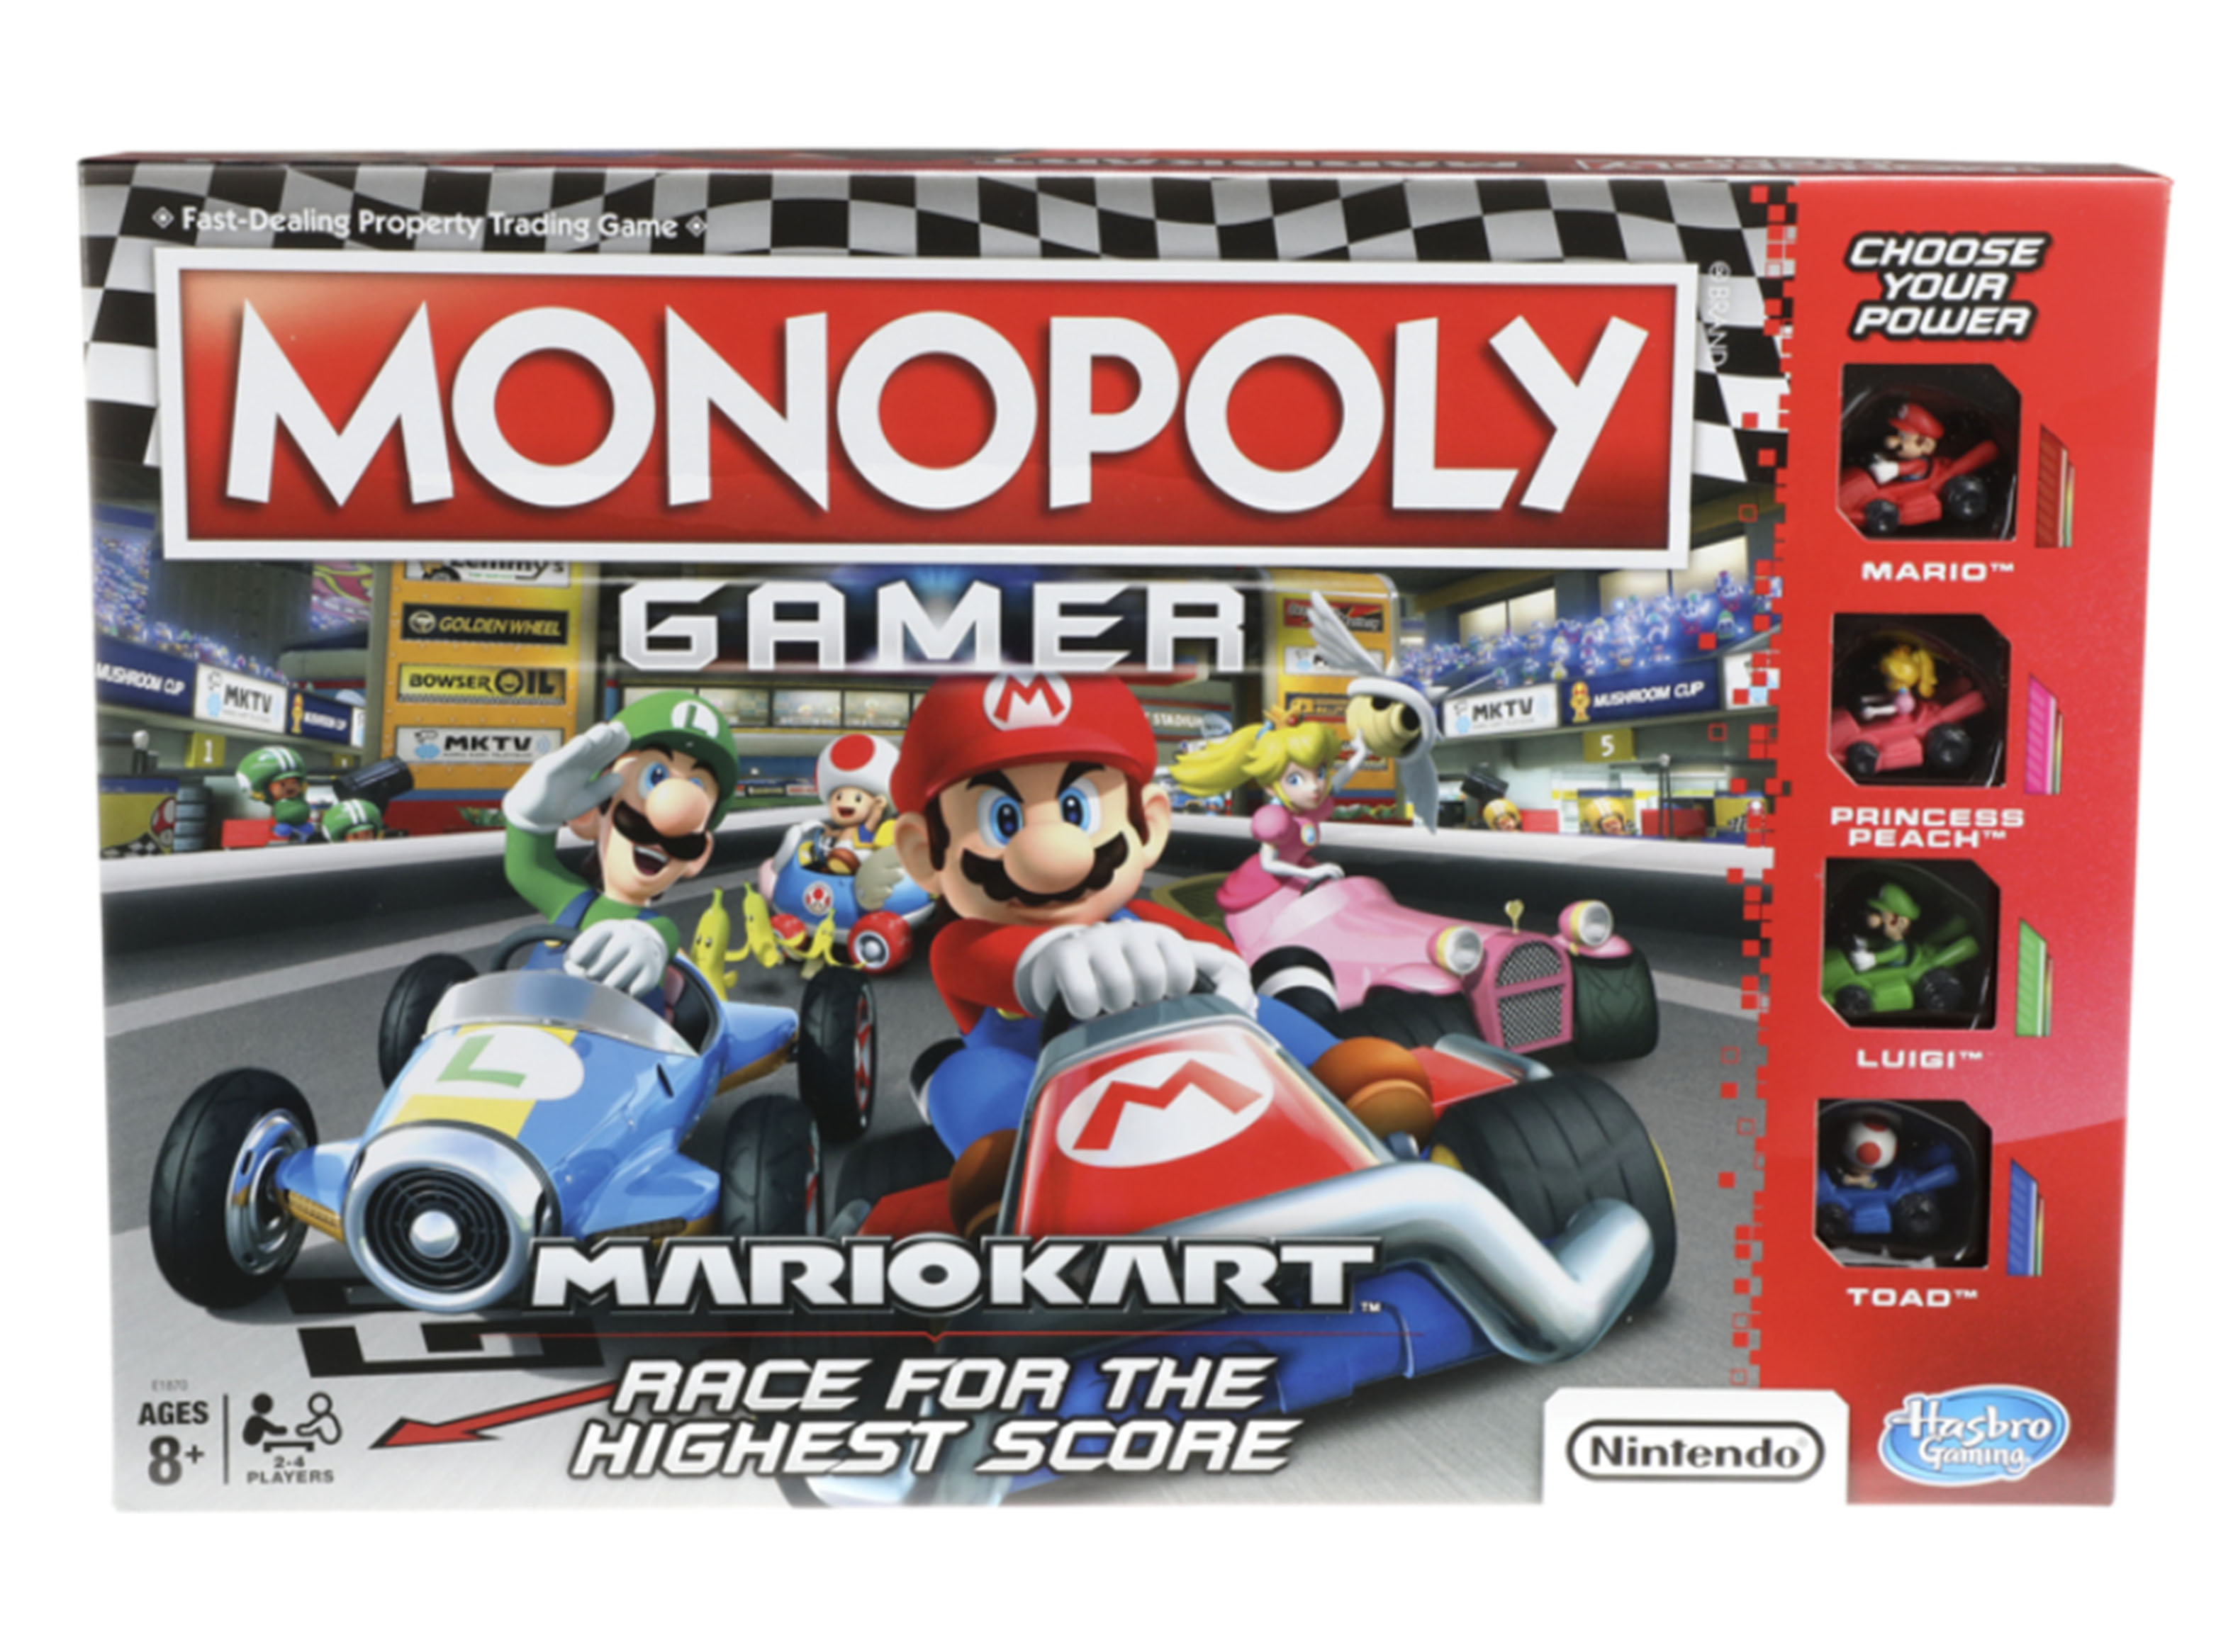 Mario Monopoly Kart